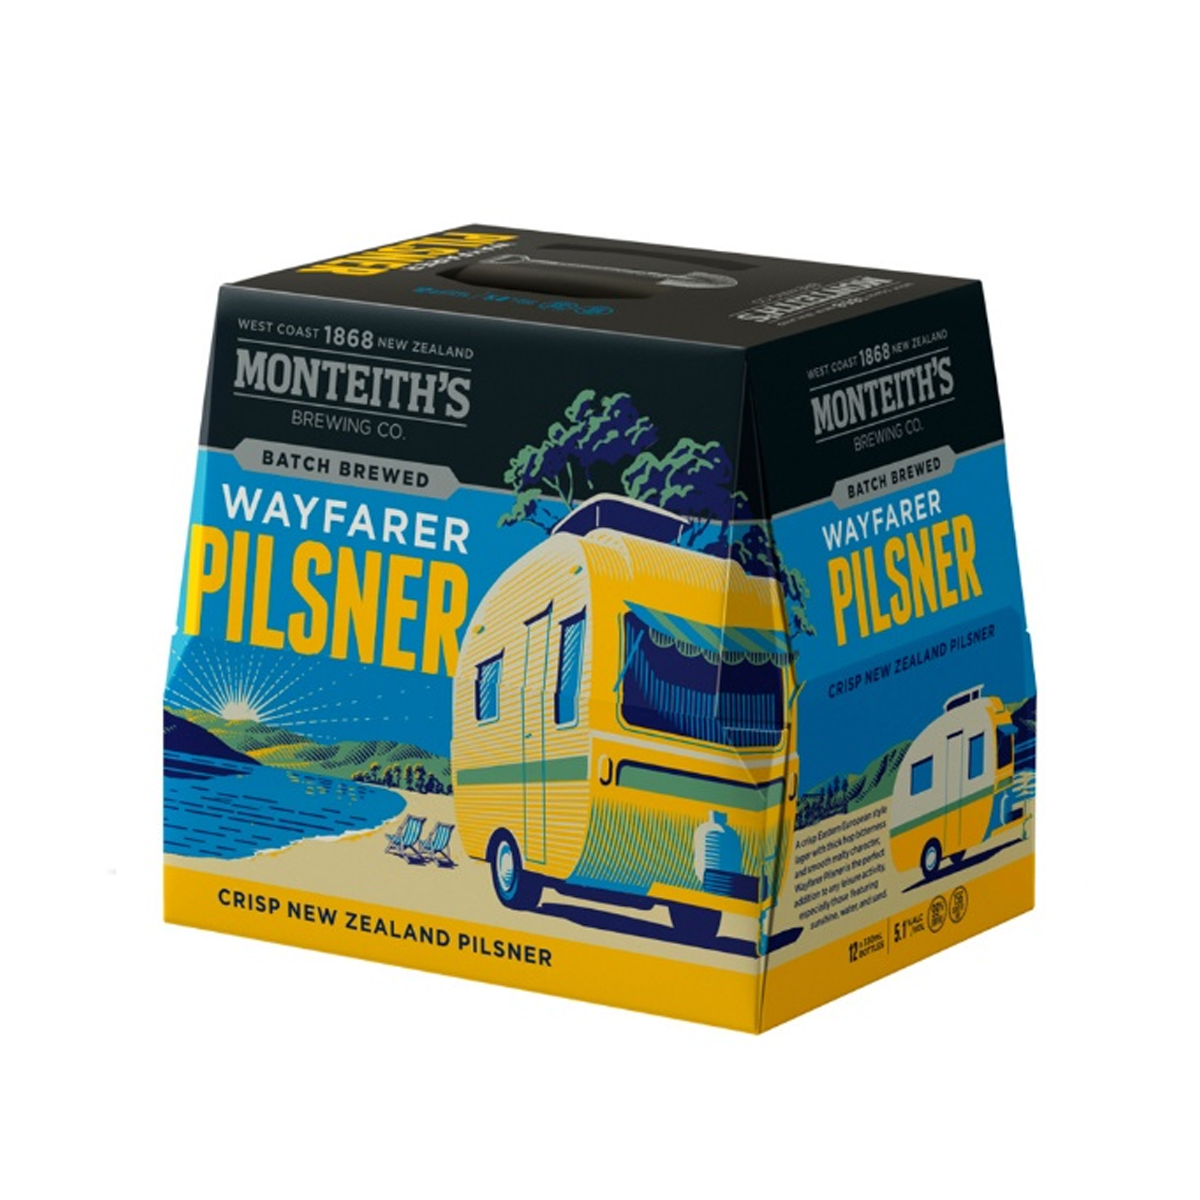 Monteith's Batch Brewed Wayfarer Pilsner Bottles 12x330ml